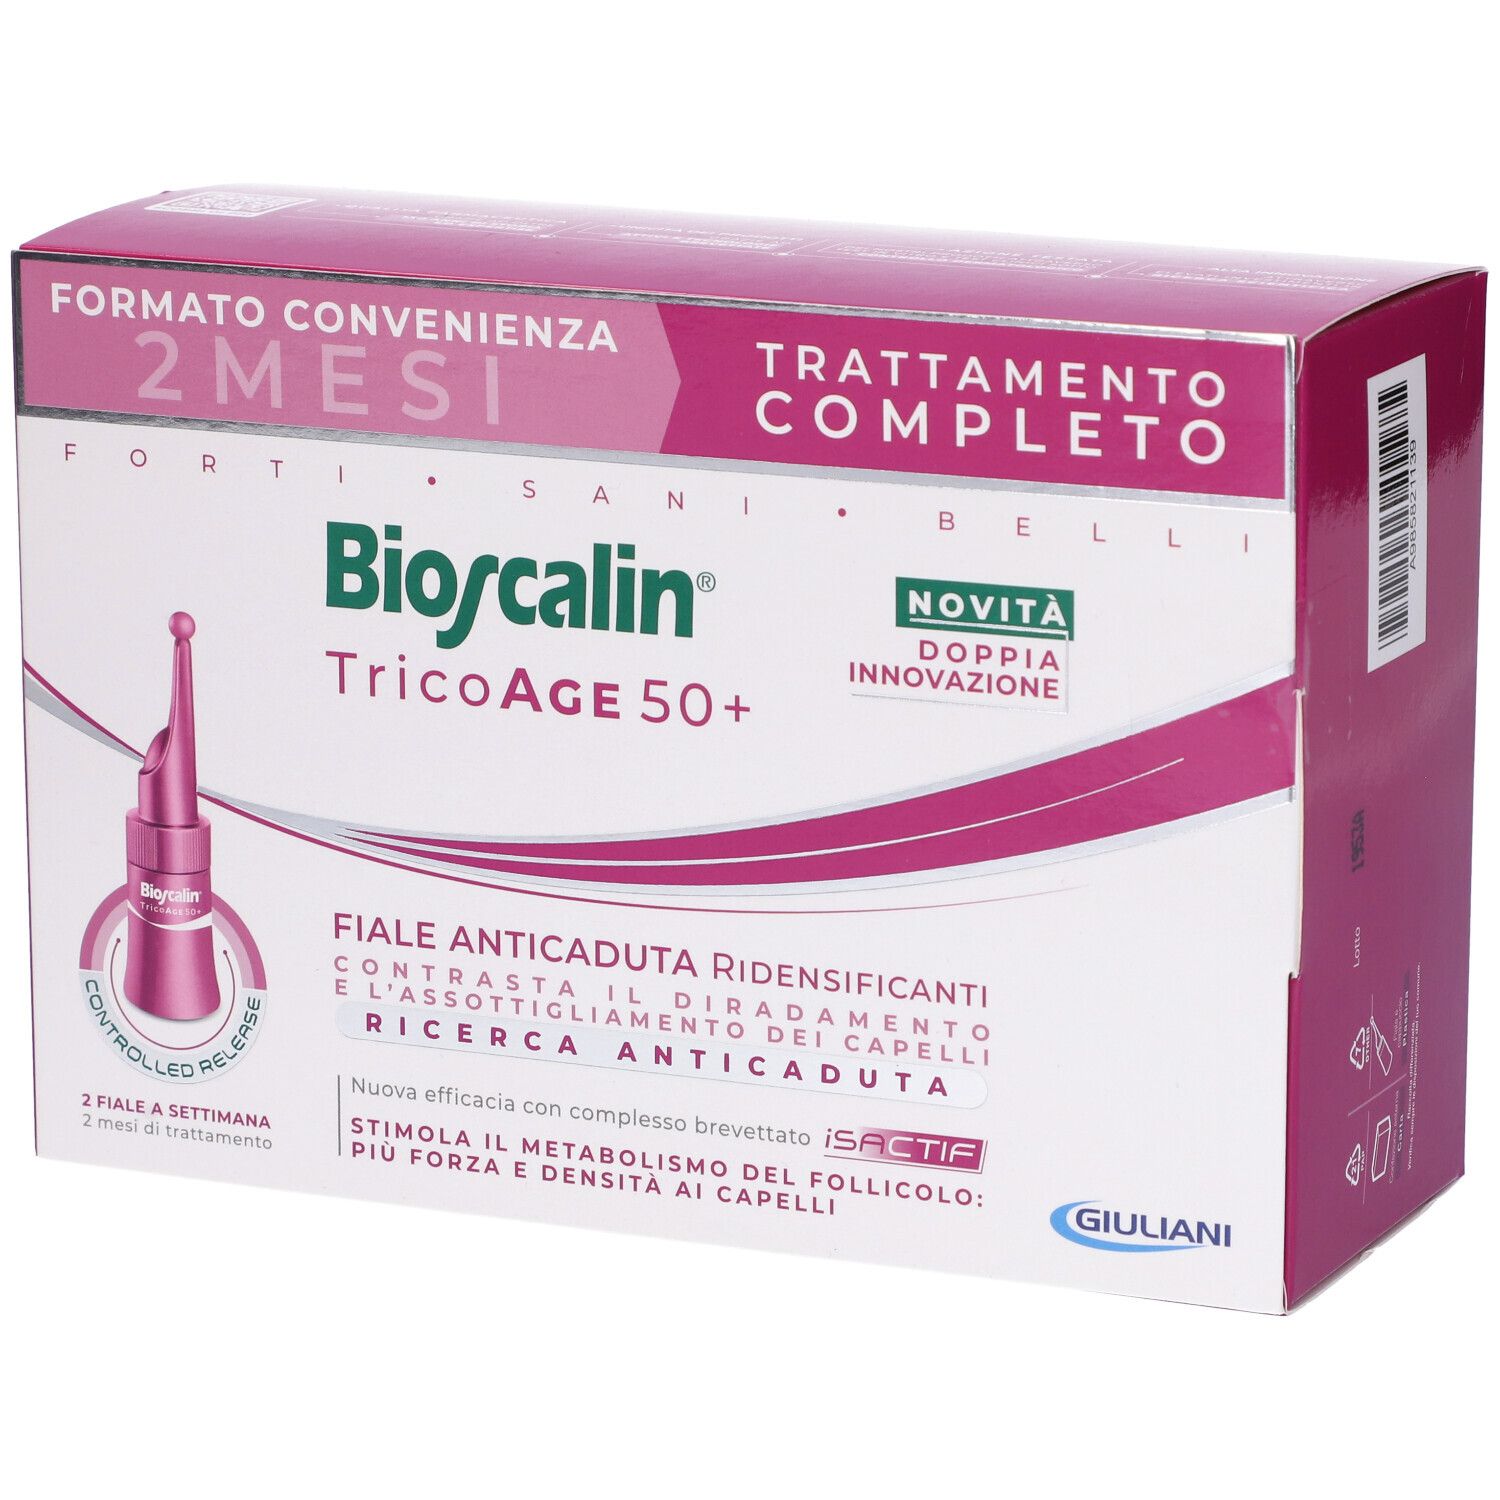 Image of Bioscalin TricoAge 50+ Fiale Anticaduta Ridensificanti